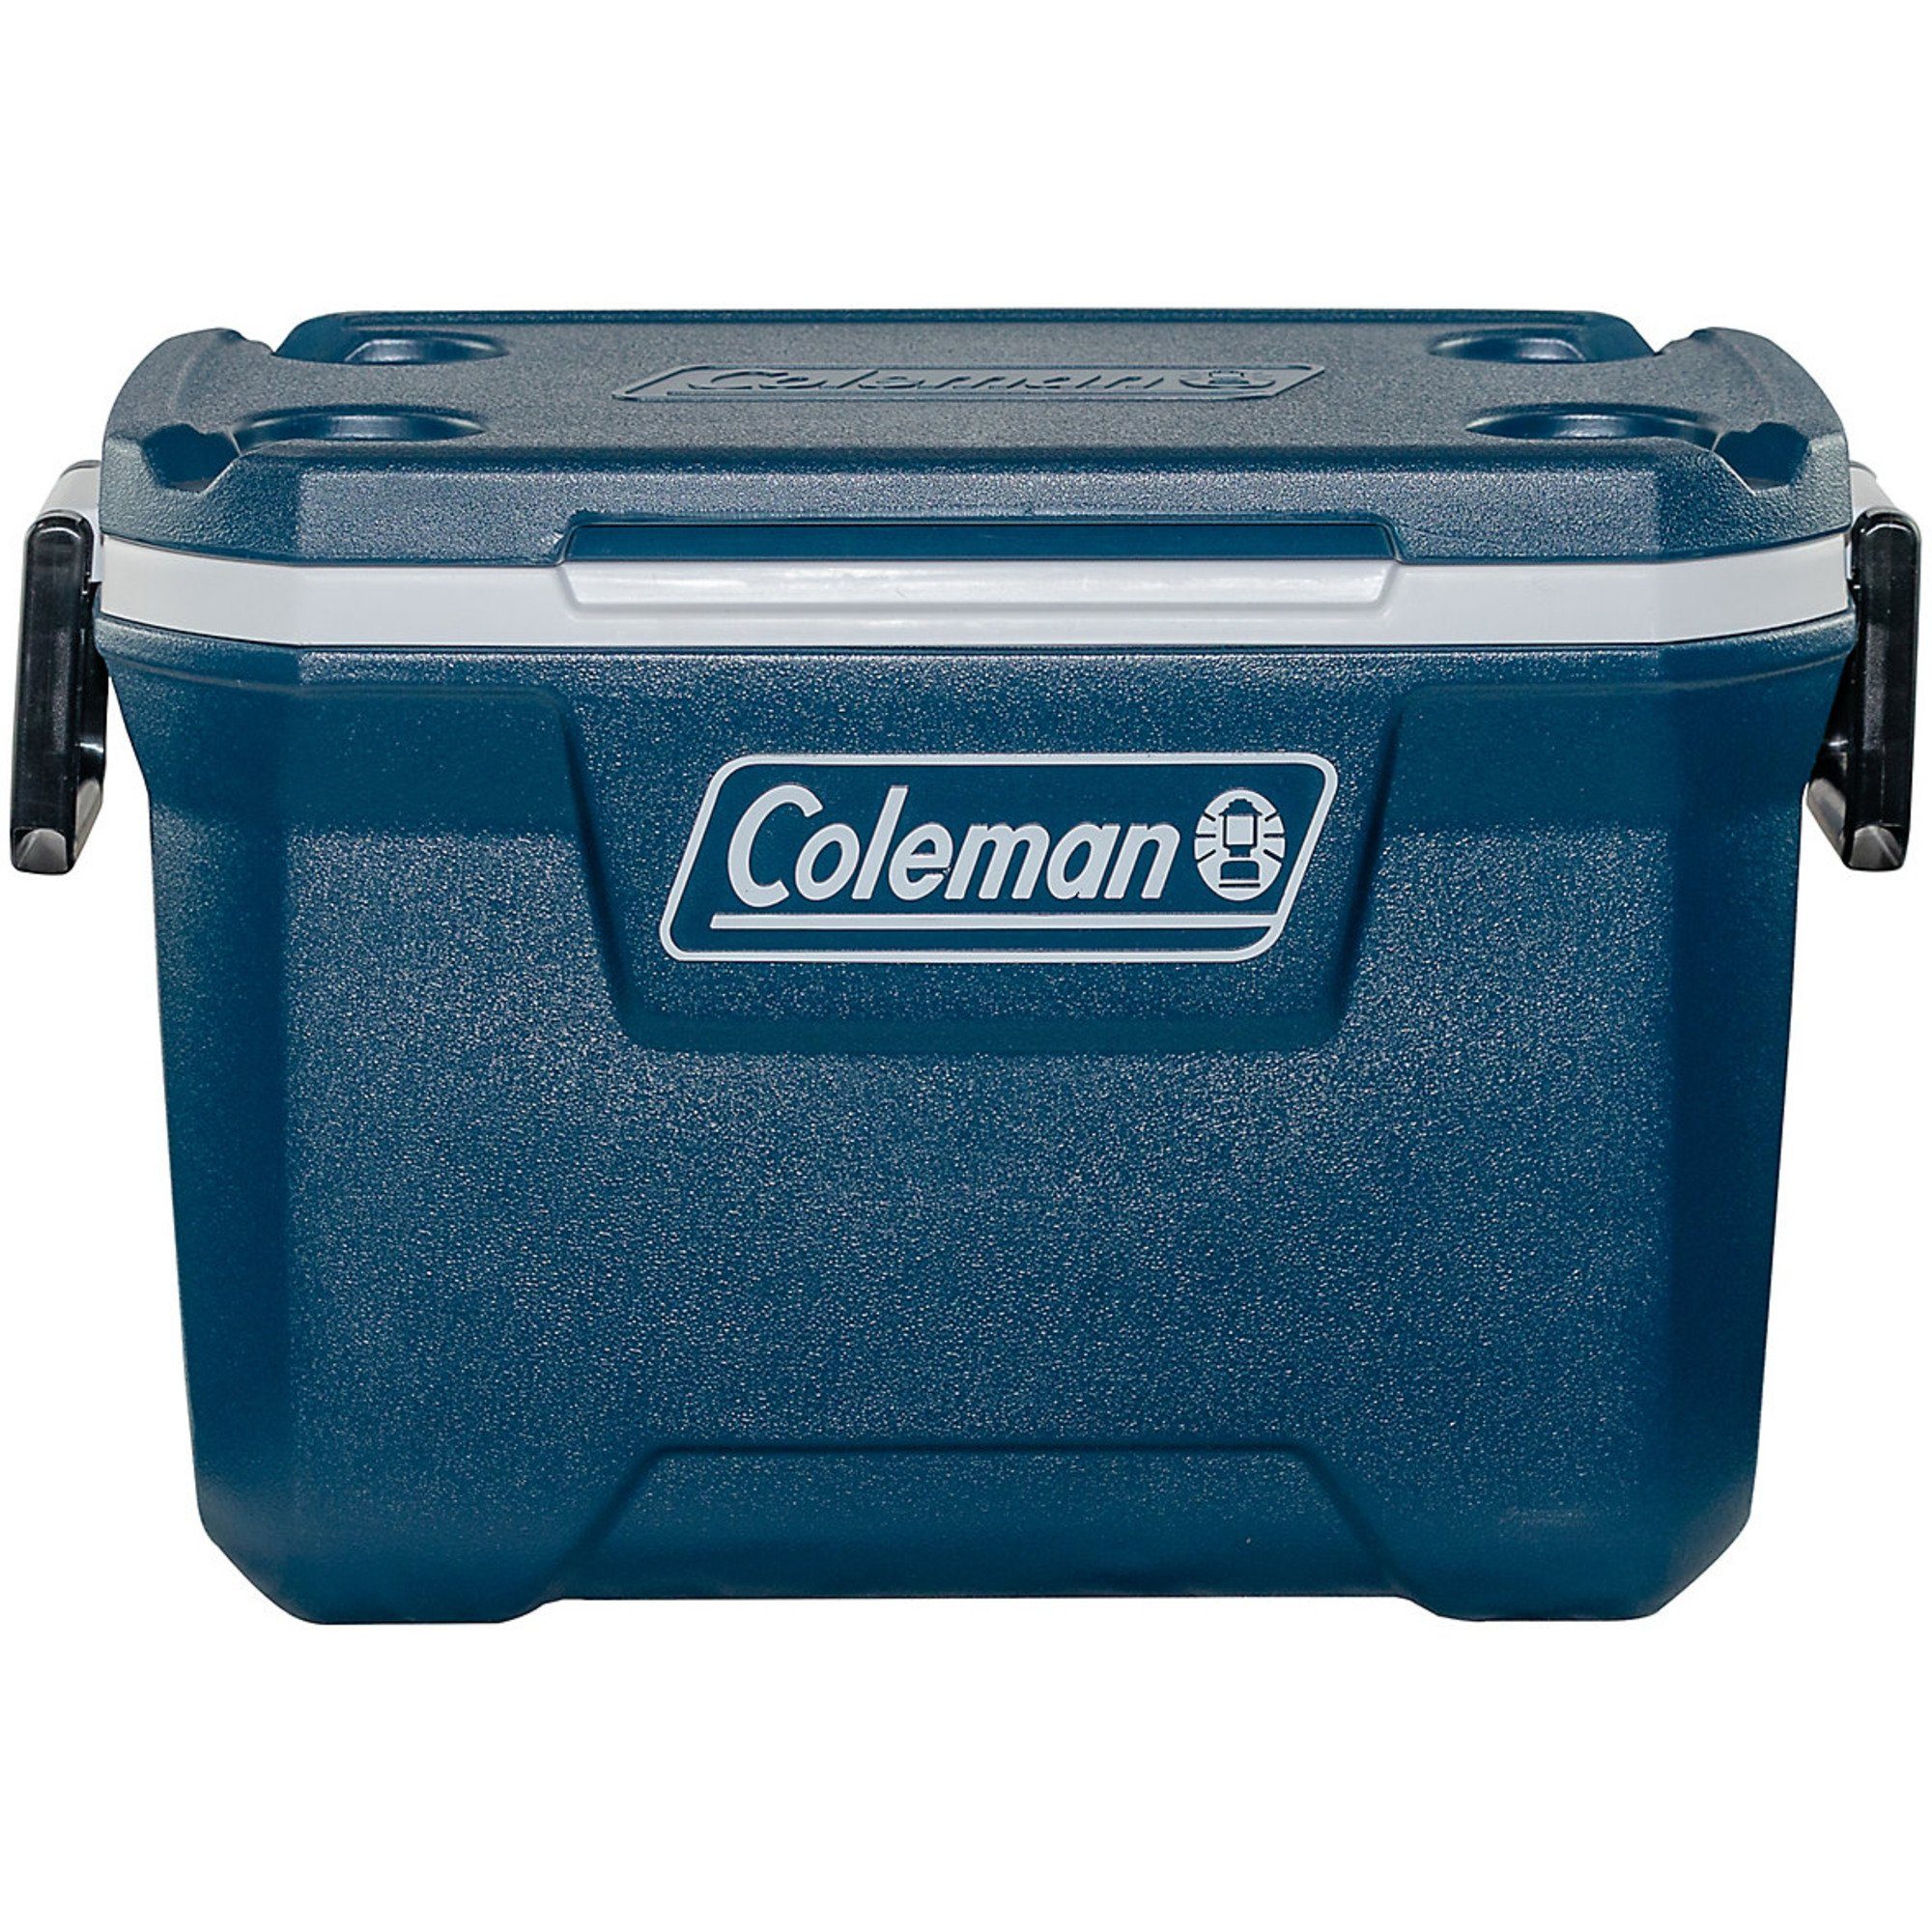 COLEMAN Kühlbox 52QT Xtreme Chest, Funktion: Temperatur halten